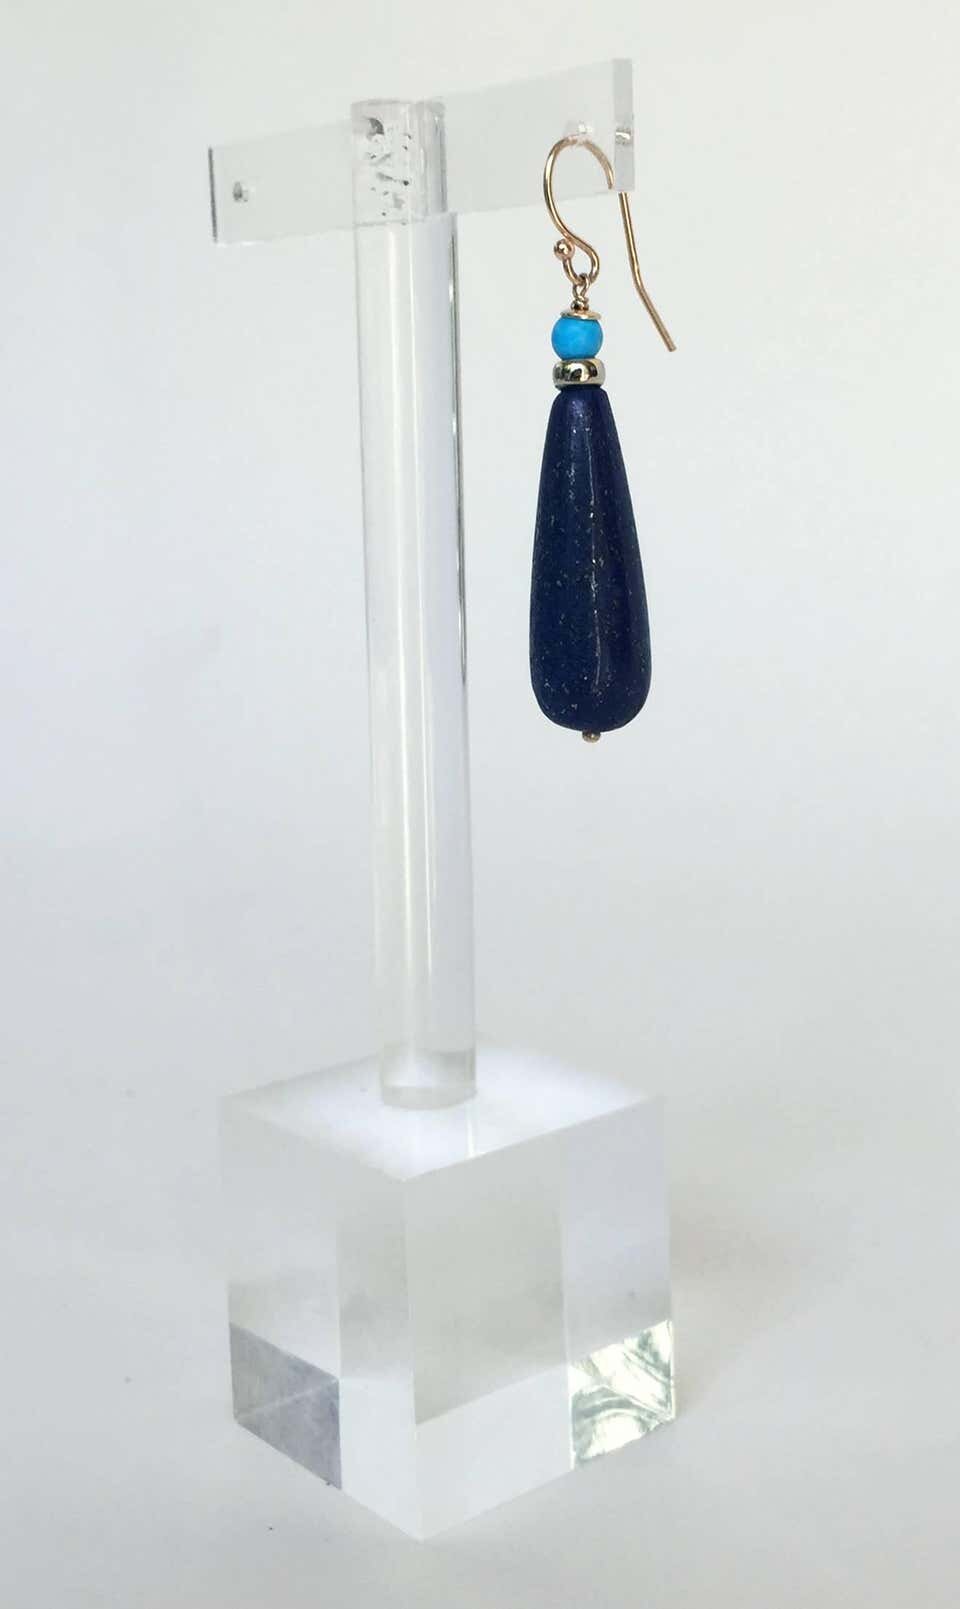 Marina J Lapis Lazuli and Turquoise Drop Earrings with 14 K Gold Hooks